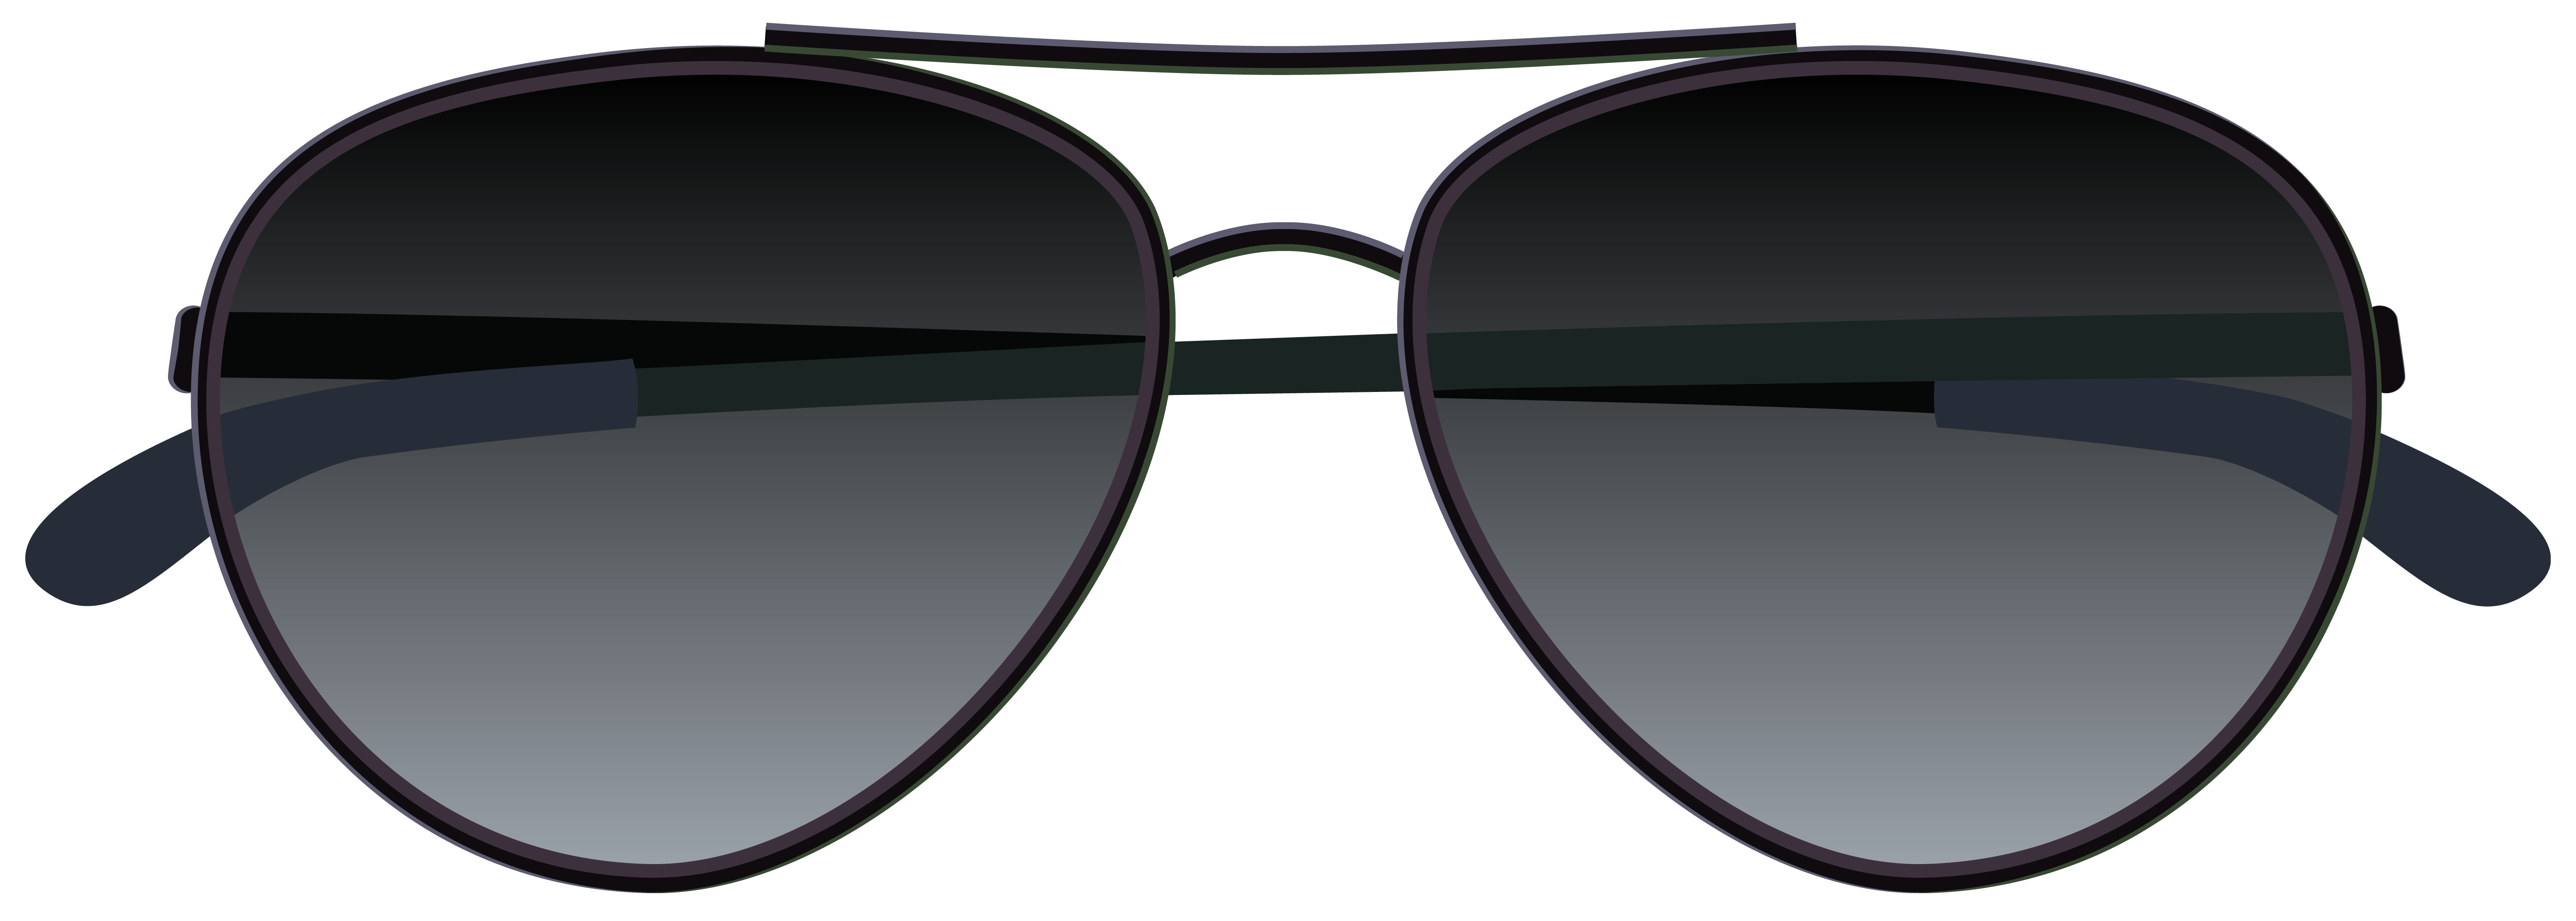 Sunglasses Transparent Background PNG Image